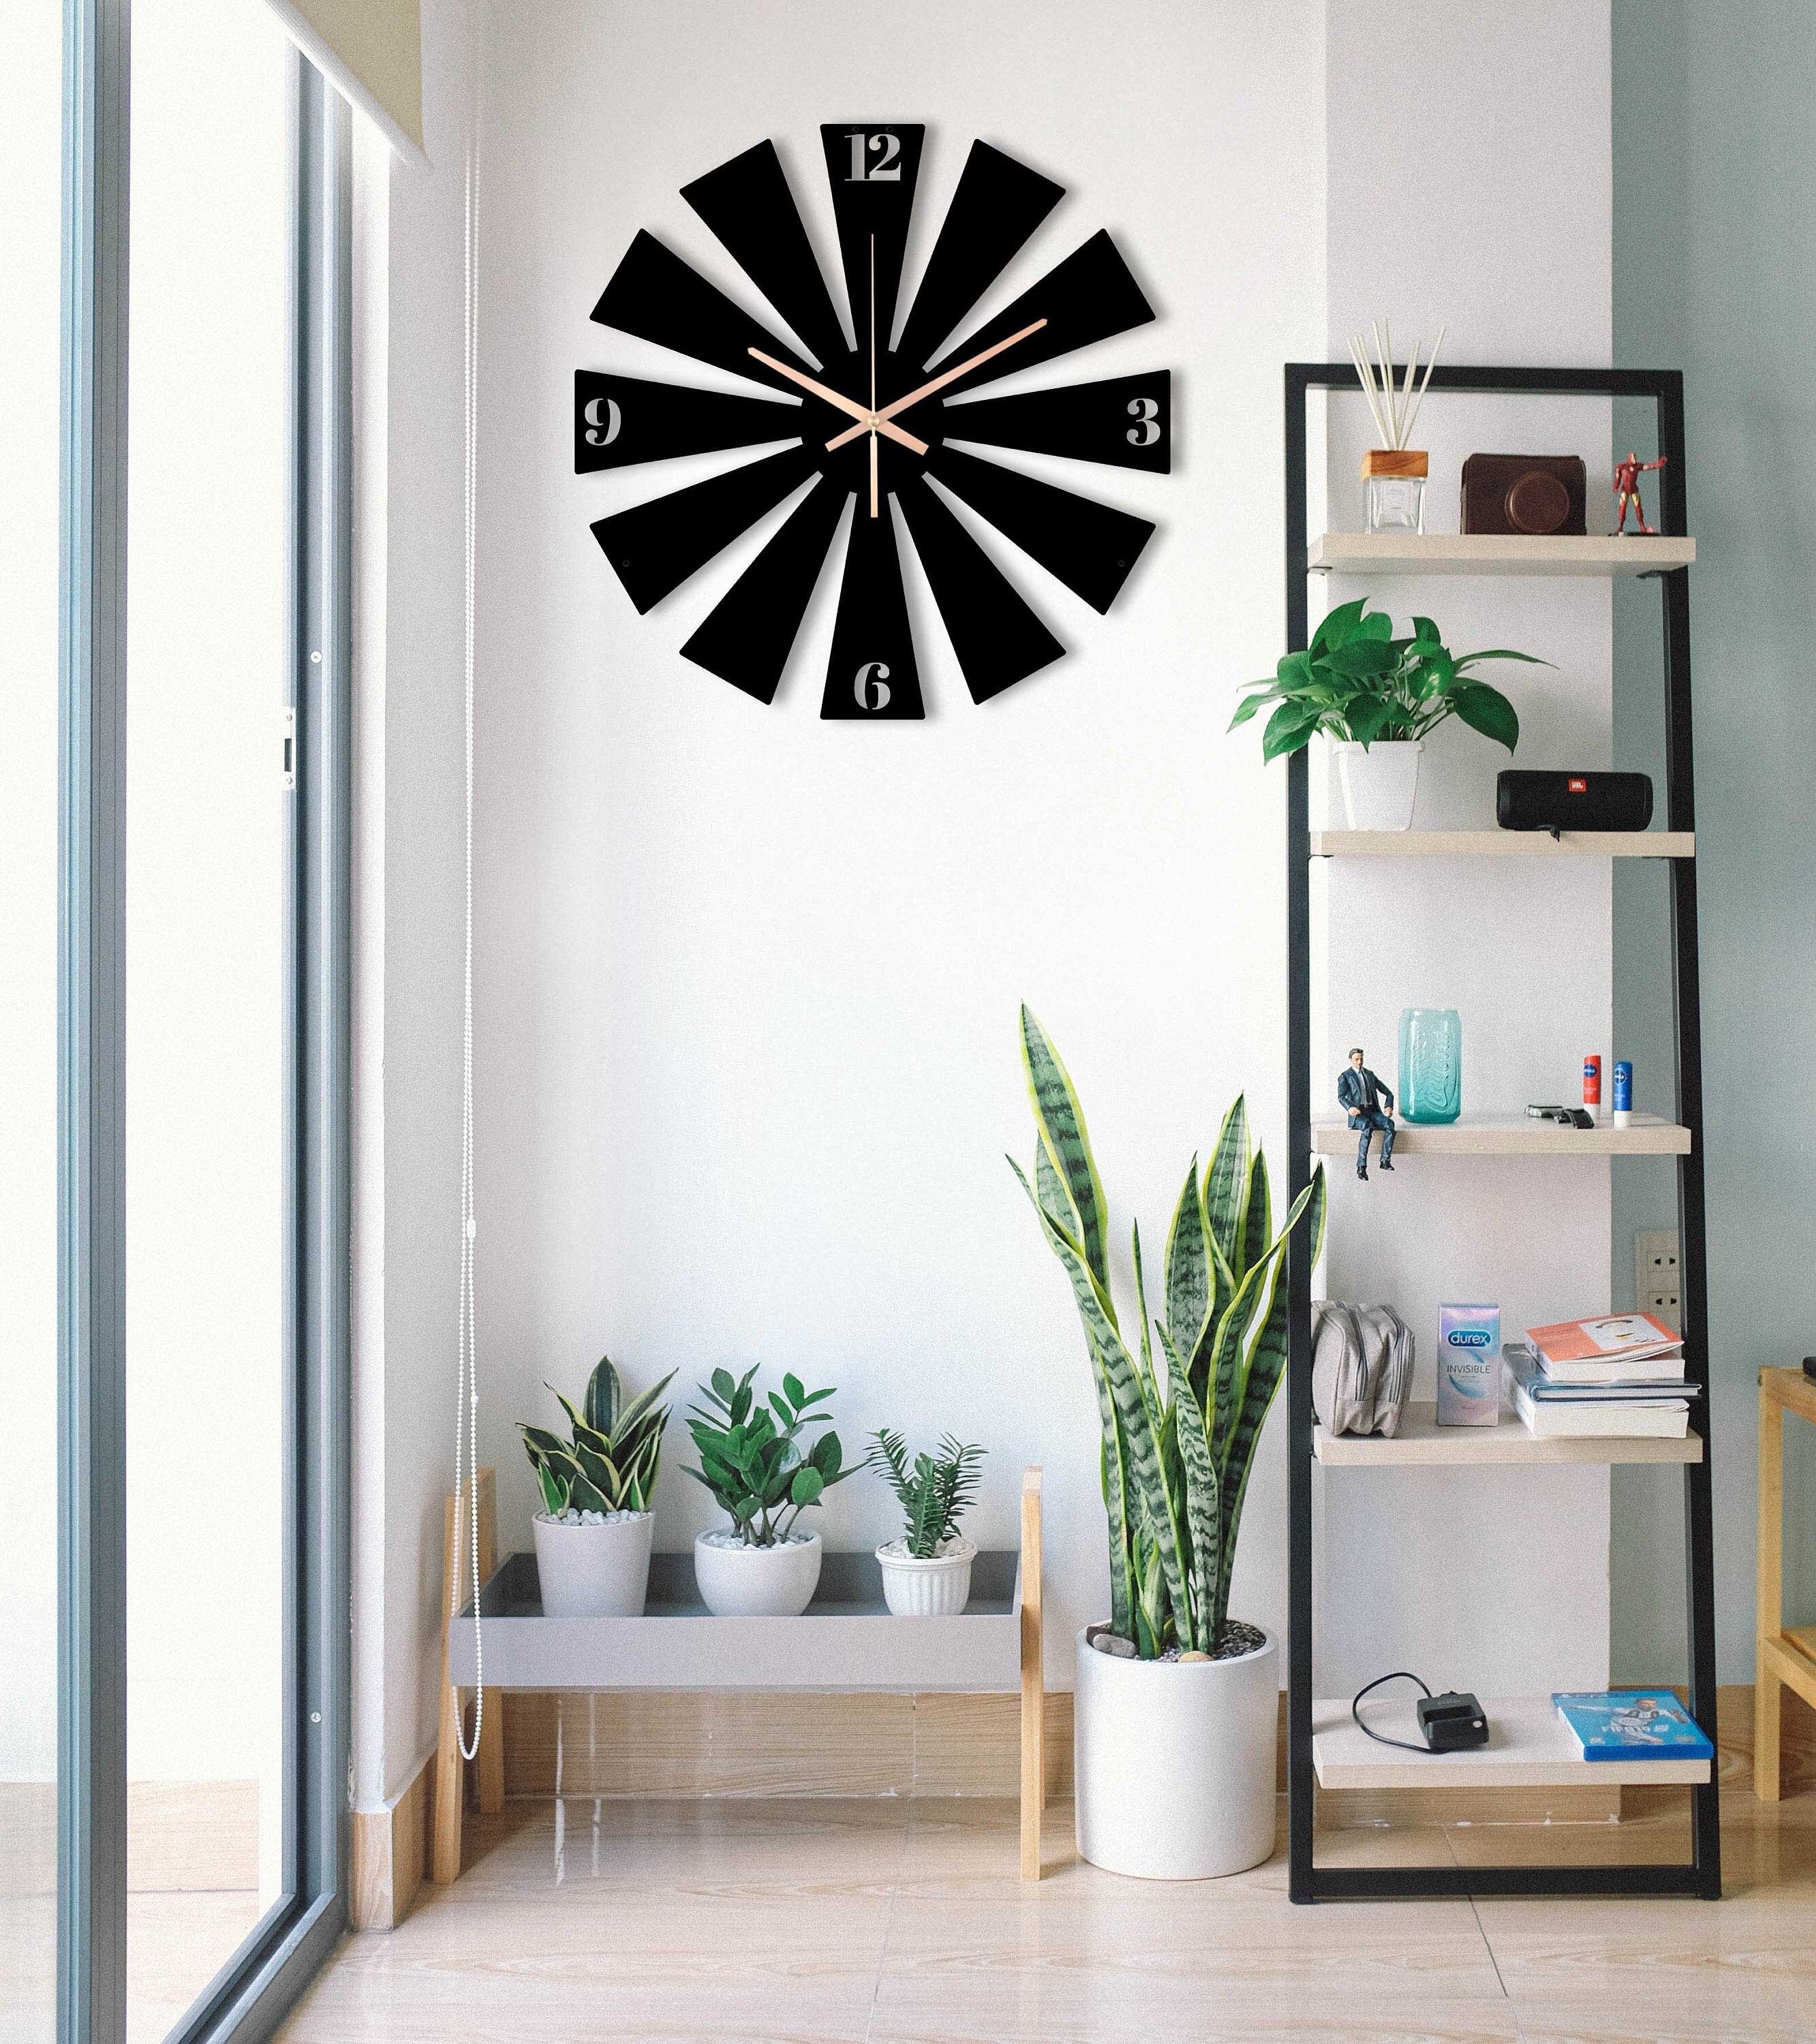 Wind Rose Clock, Oversized Wall Clock, Unique Wall Clock, Black Wall Clock, Small Game Room Clock, Sunburst Wall Clock, Laser Cut Clock